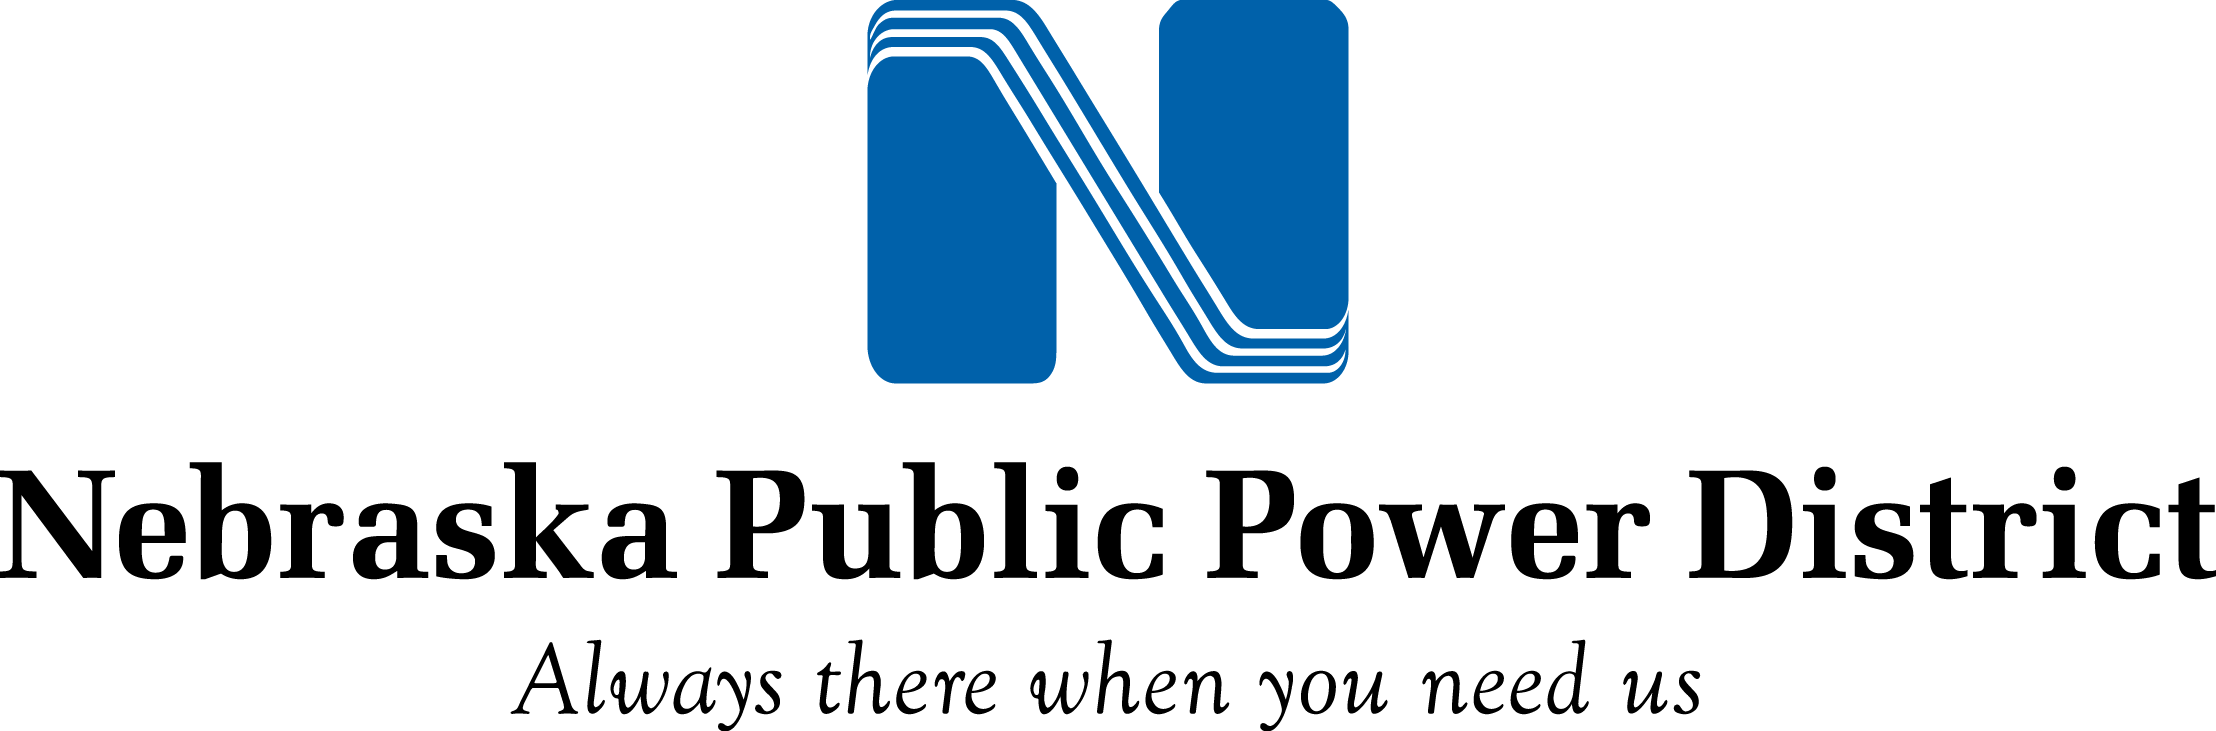 NPPD. Ne logo. NPPD Rush. Public powers